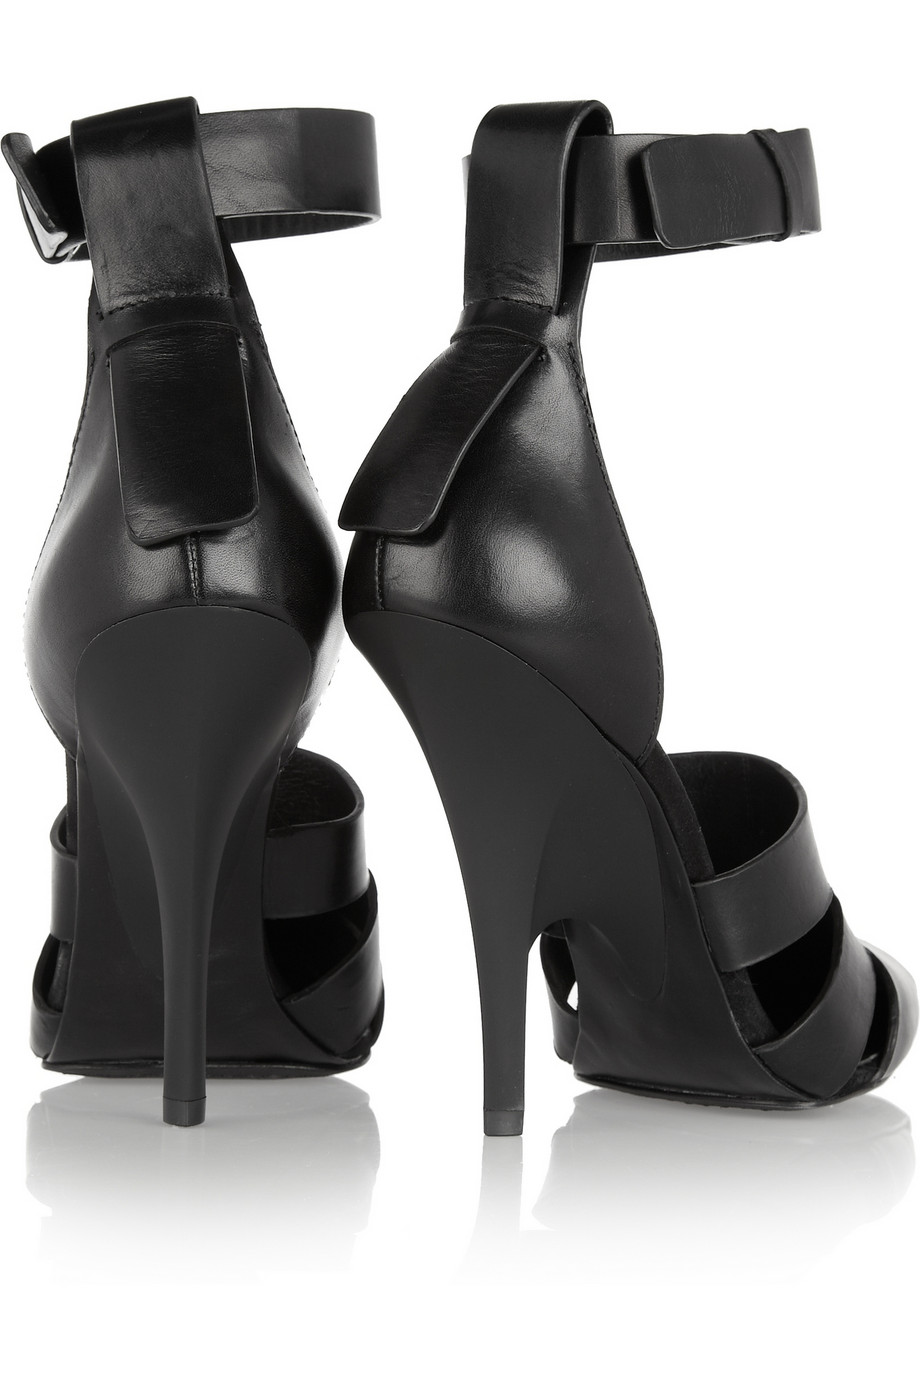 Lyst - Alexander Wang Joan Leather Sandals in Black